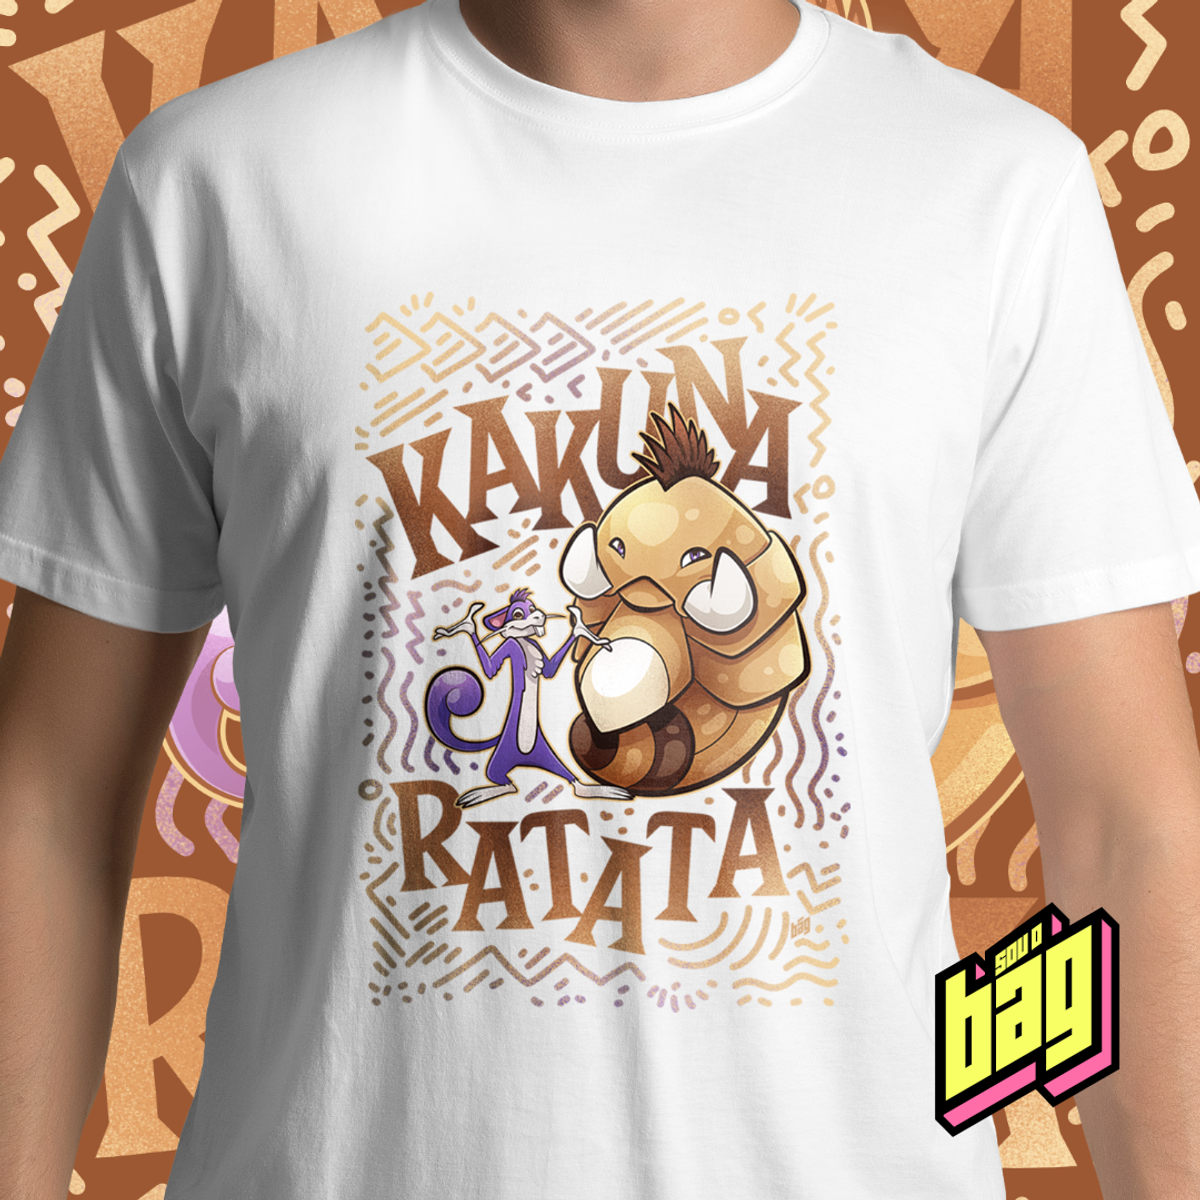 Nome do produto: Camiseta Kakuna Ratata